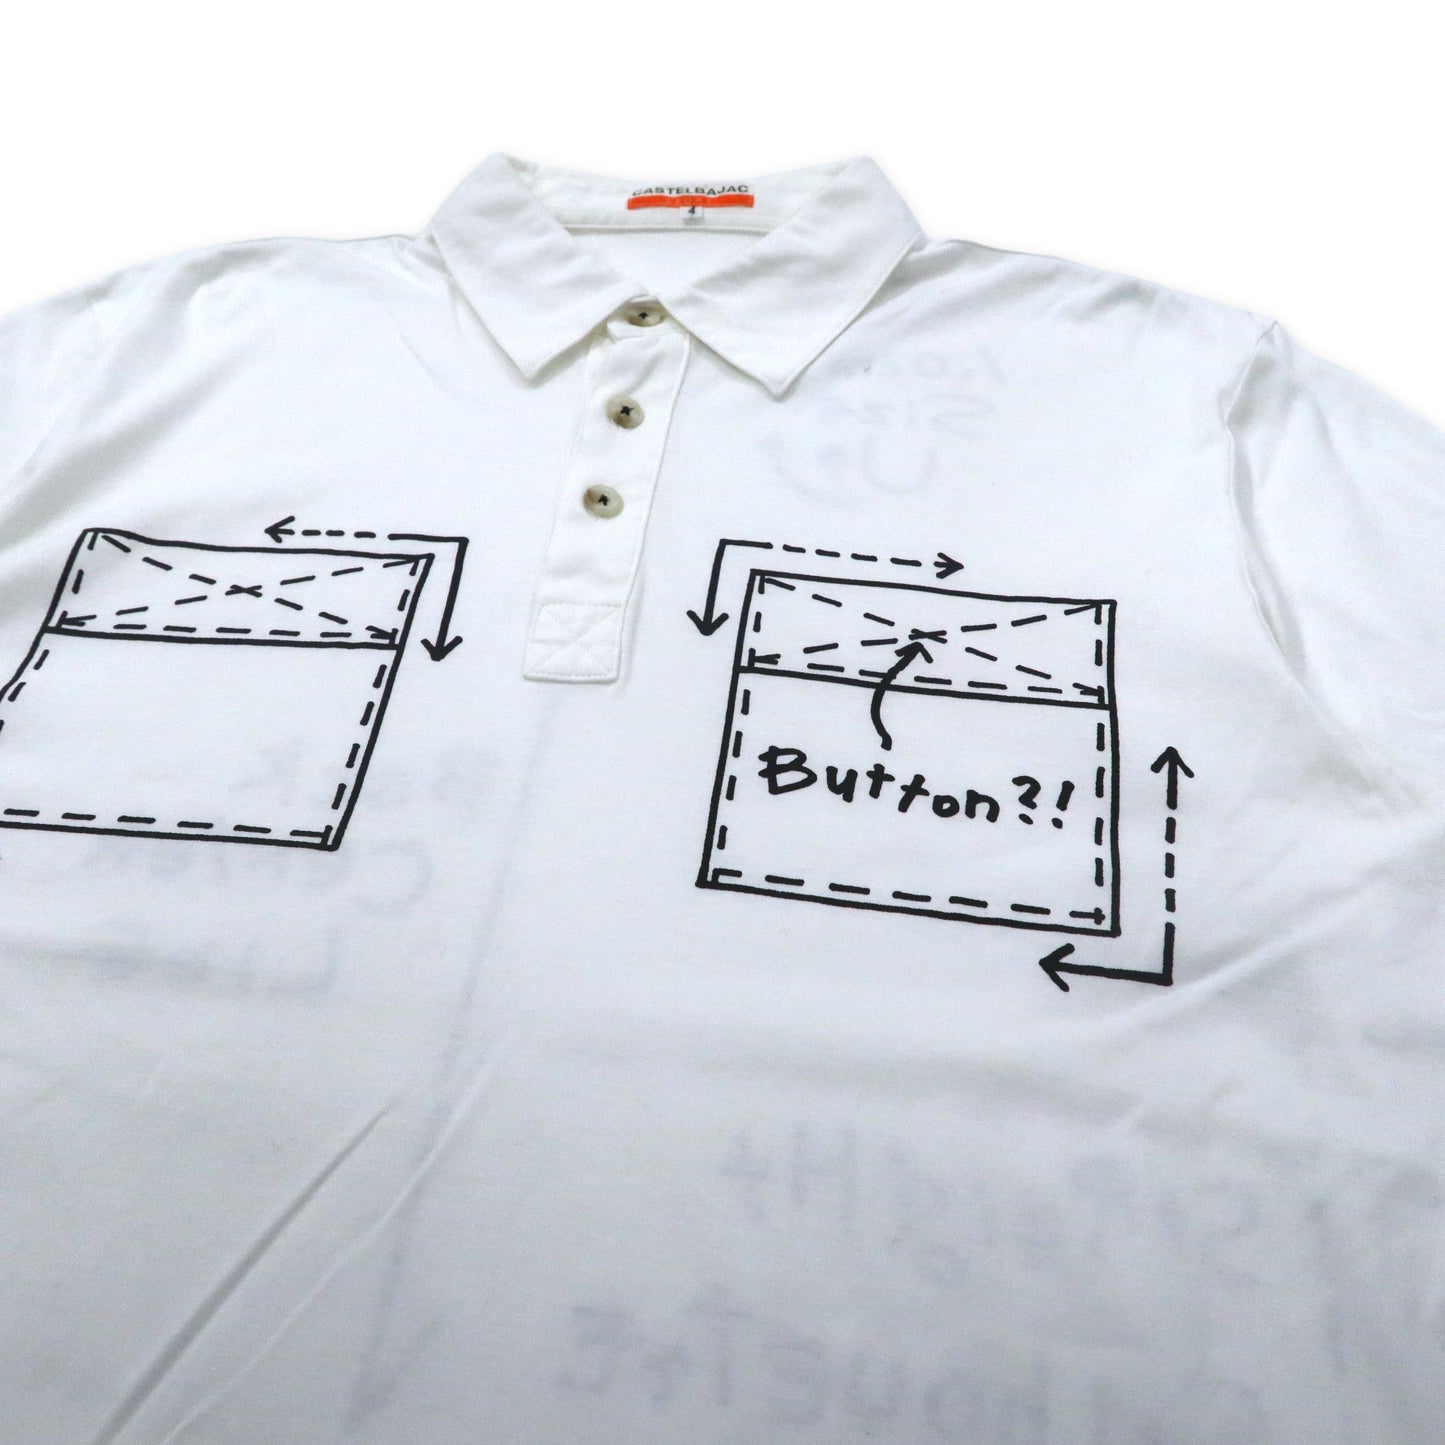 CASTELBAJAC SPORT  90年代 ペイント風 ポロシャツ  4 ホワイト コットン 日本製